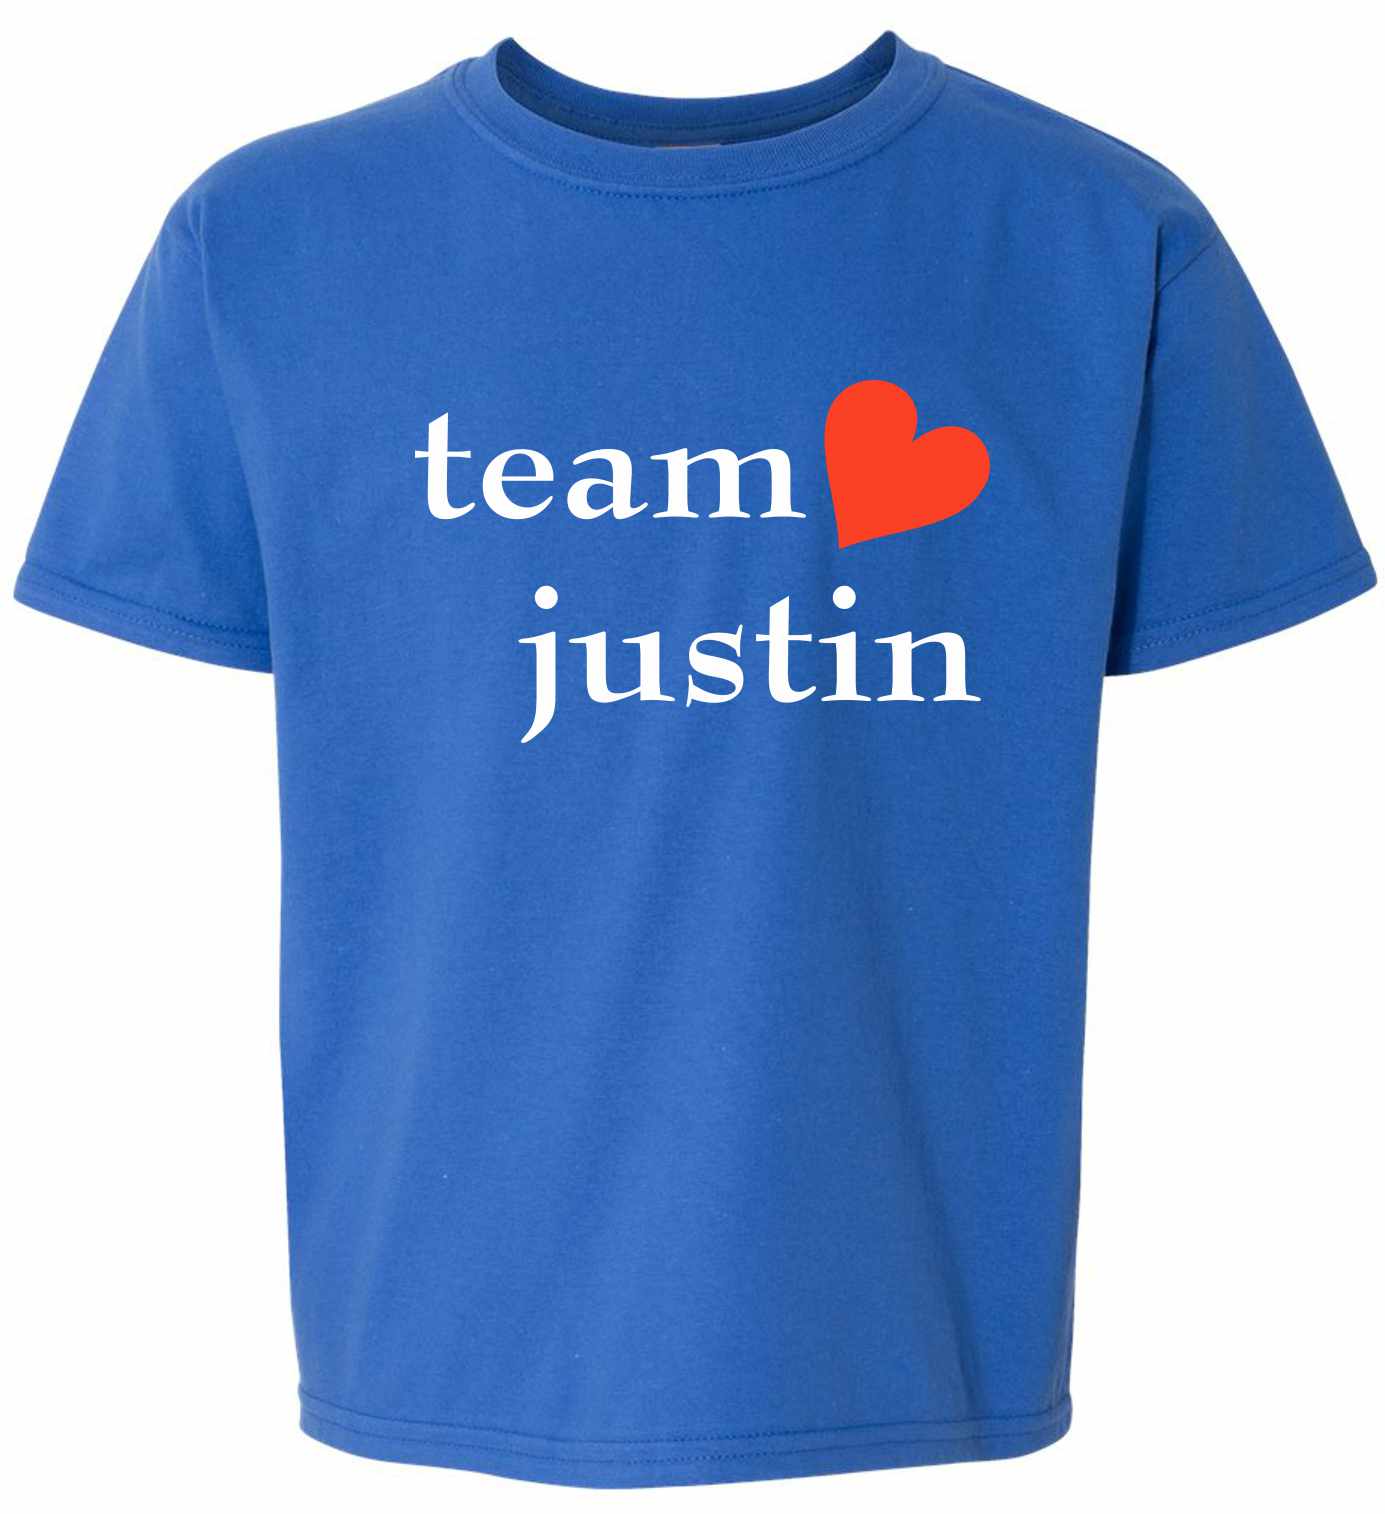 Team Justin on Kids T-Shirt (#636-201)